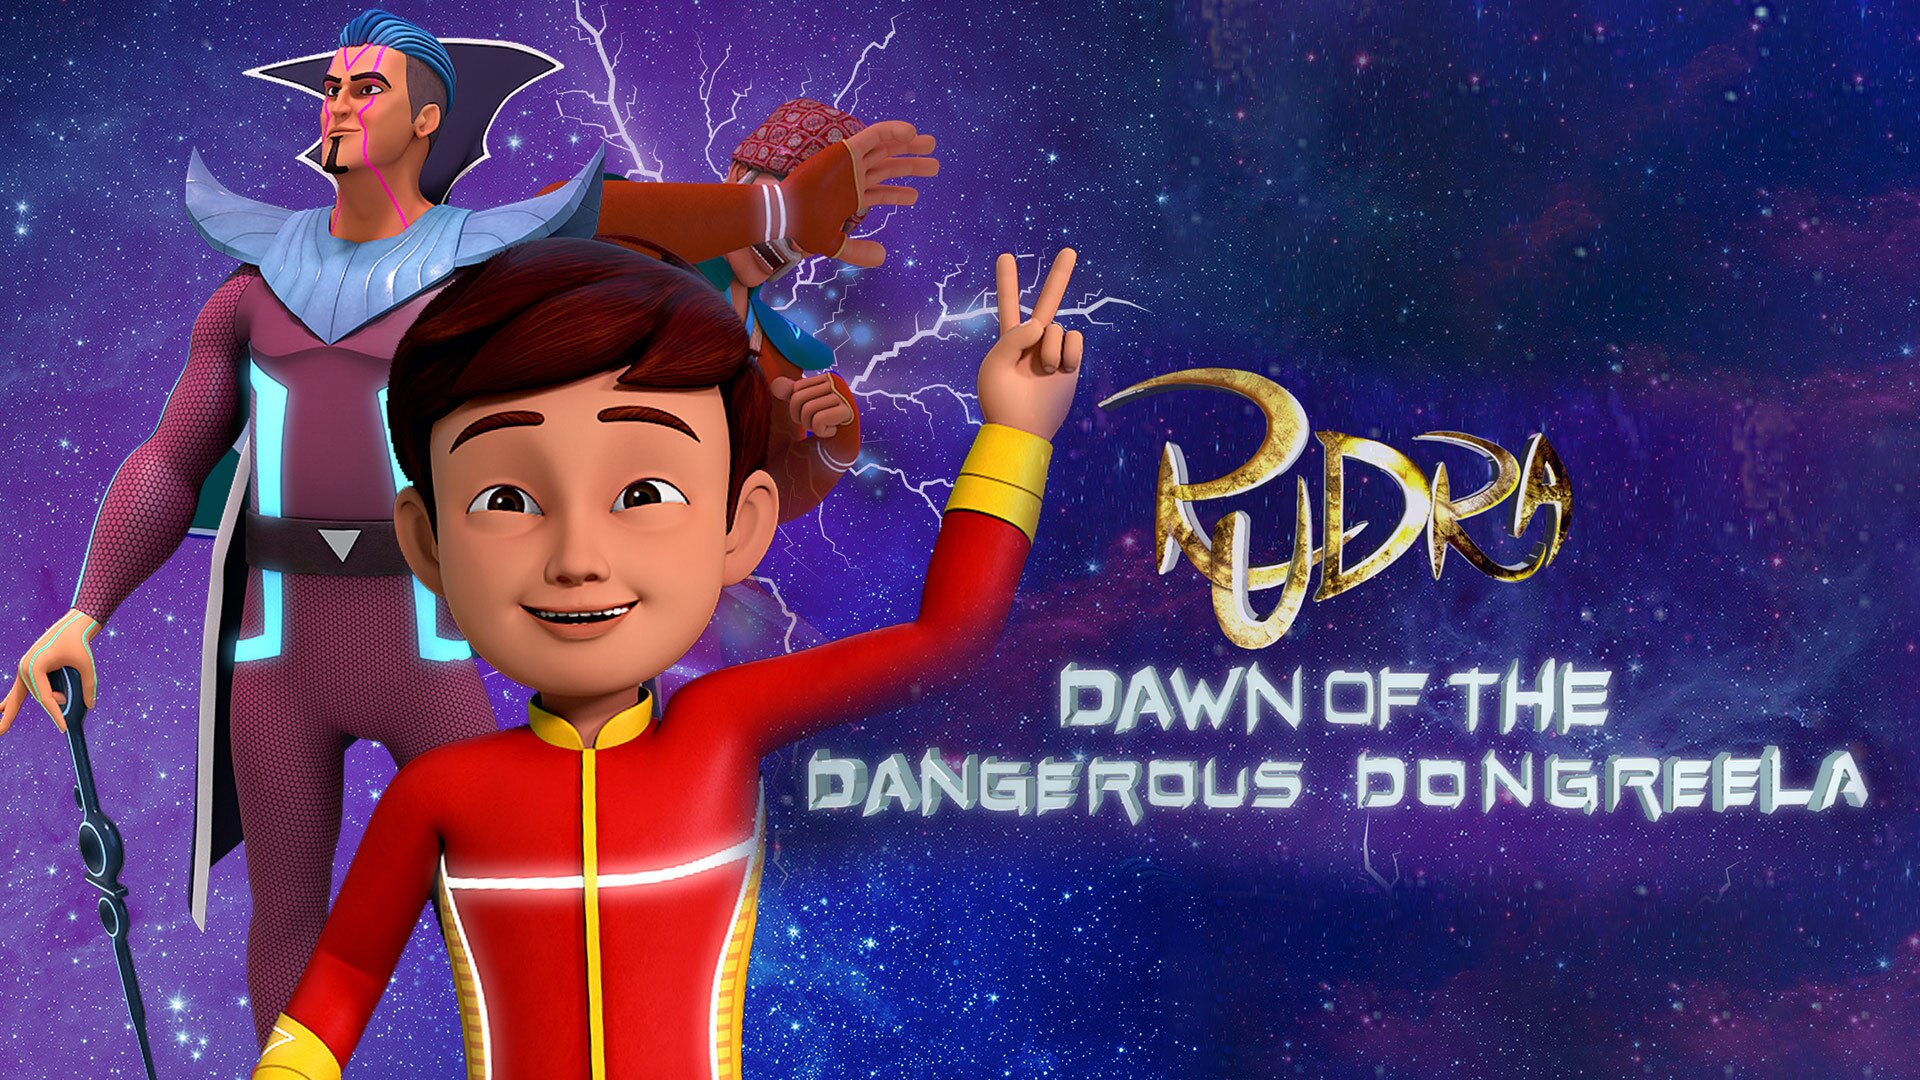 Rudra - Dawn Of The Dangerous Dongreela | Watch Full HD Hindi Movie Rudra -  Dawn Of The Dangerous Dongreela 2019 Online